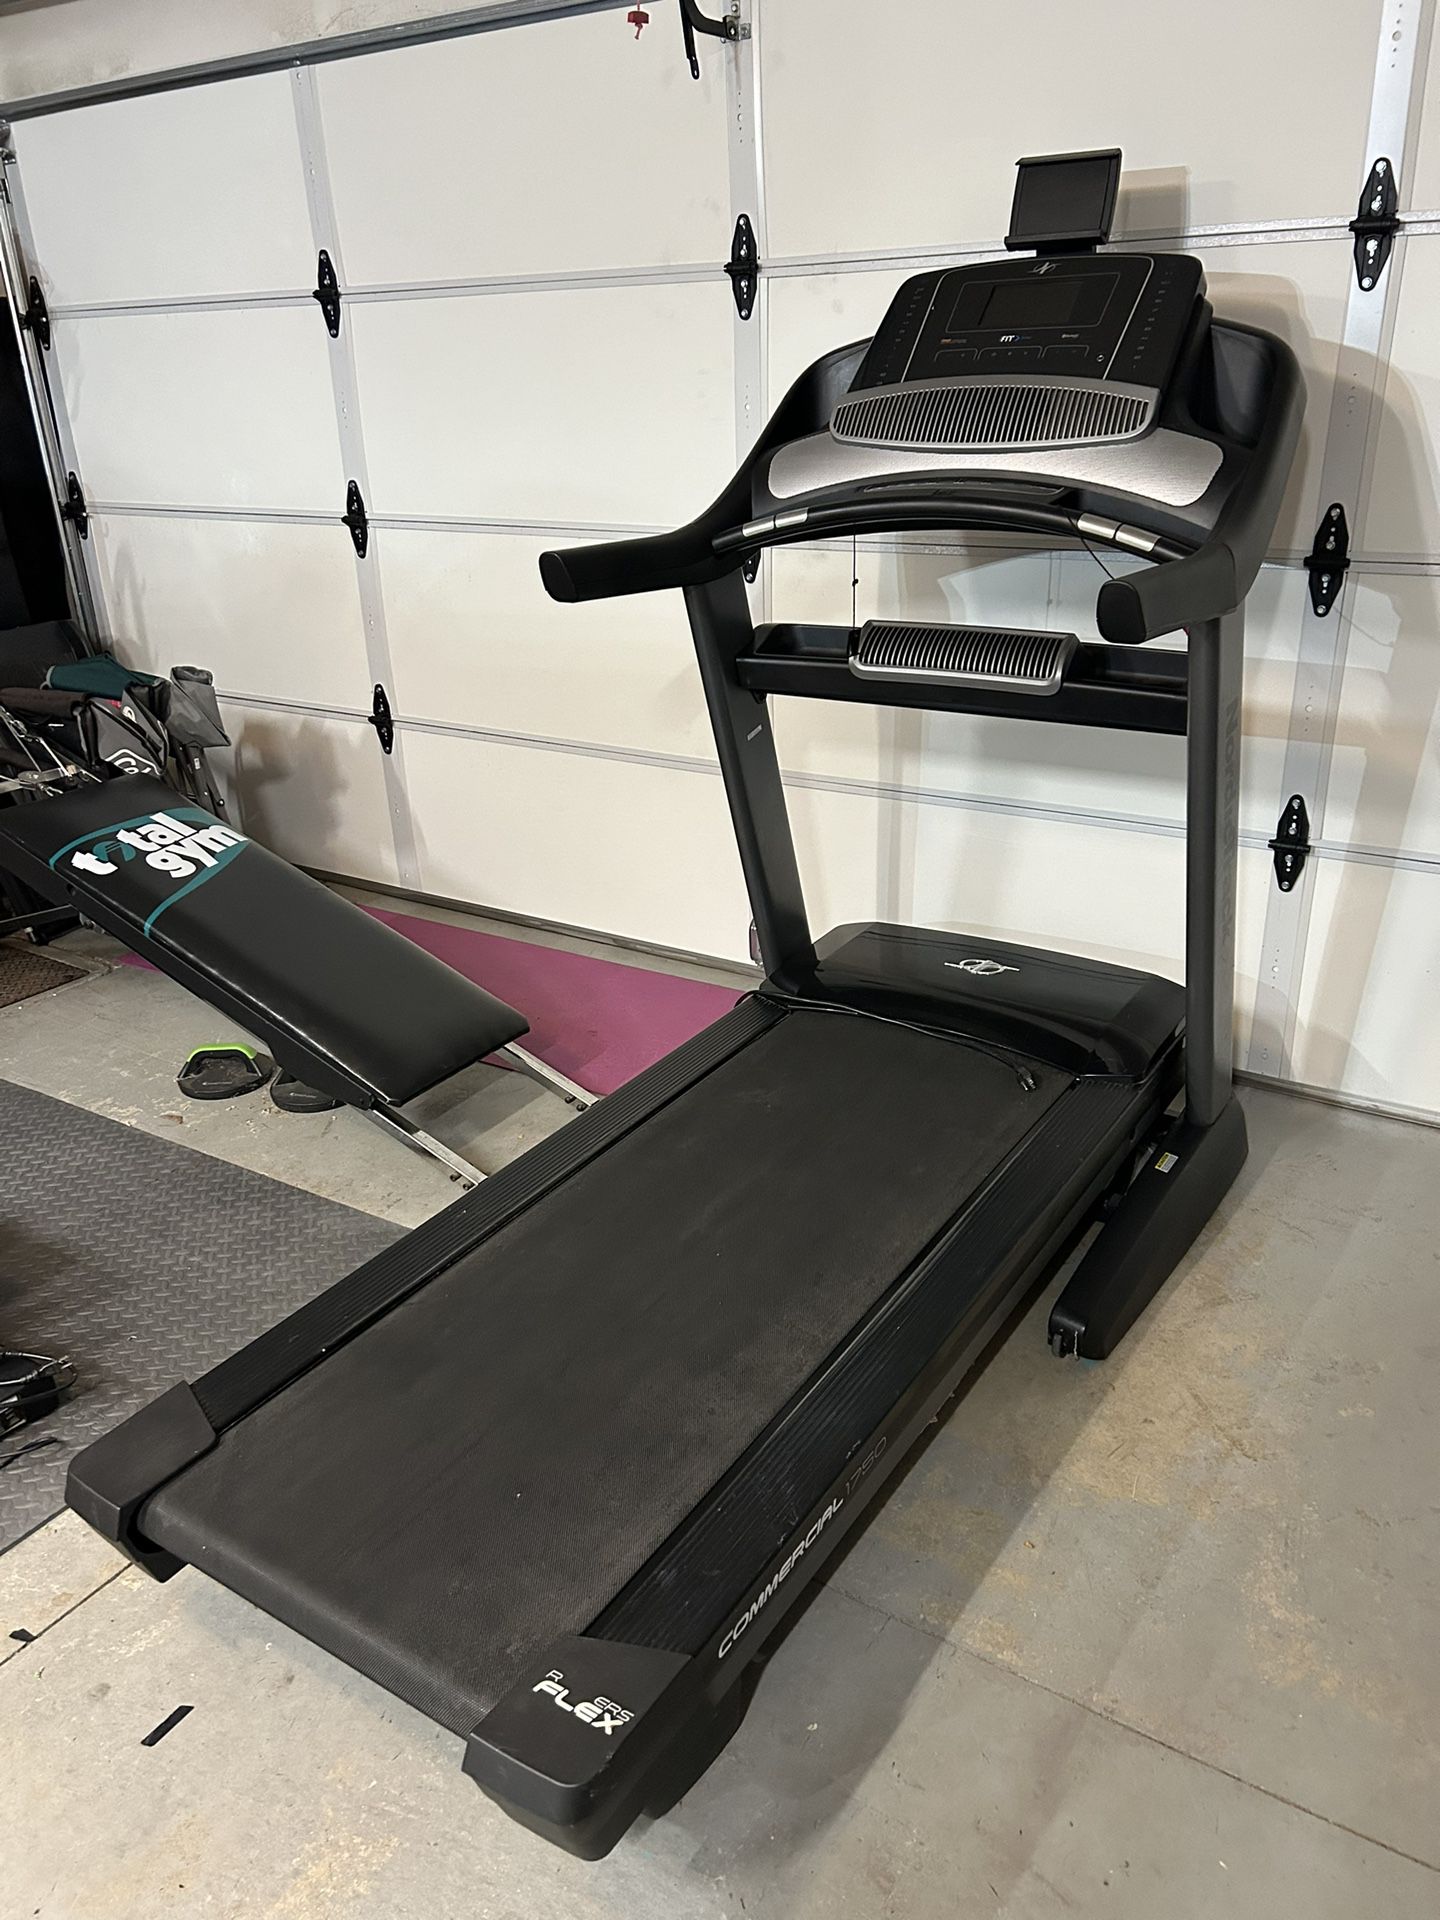 NordicTrack Commercial 1750 Treadmill (2019 Model)